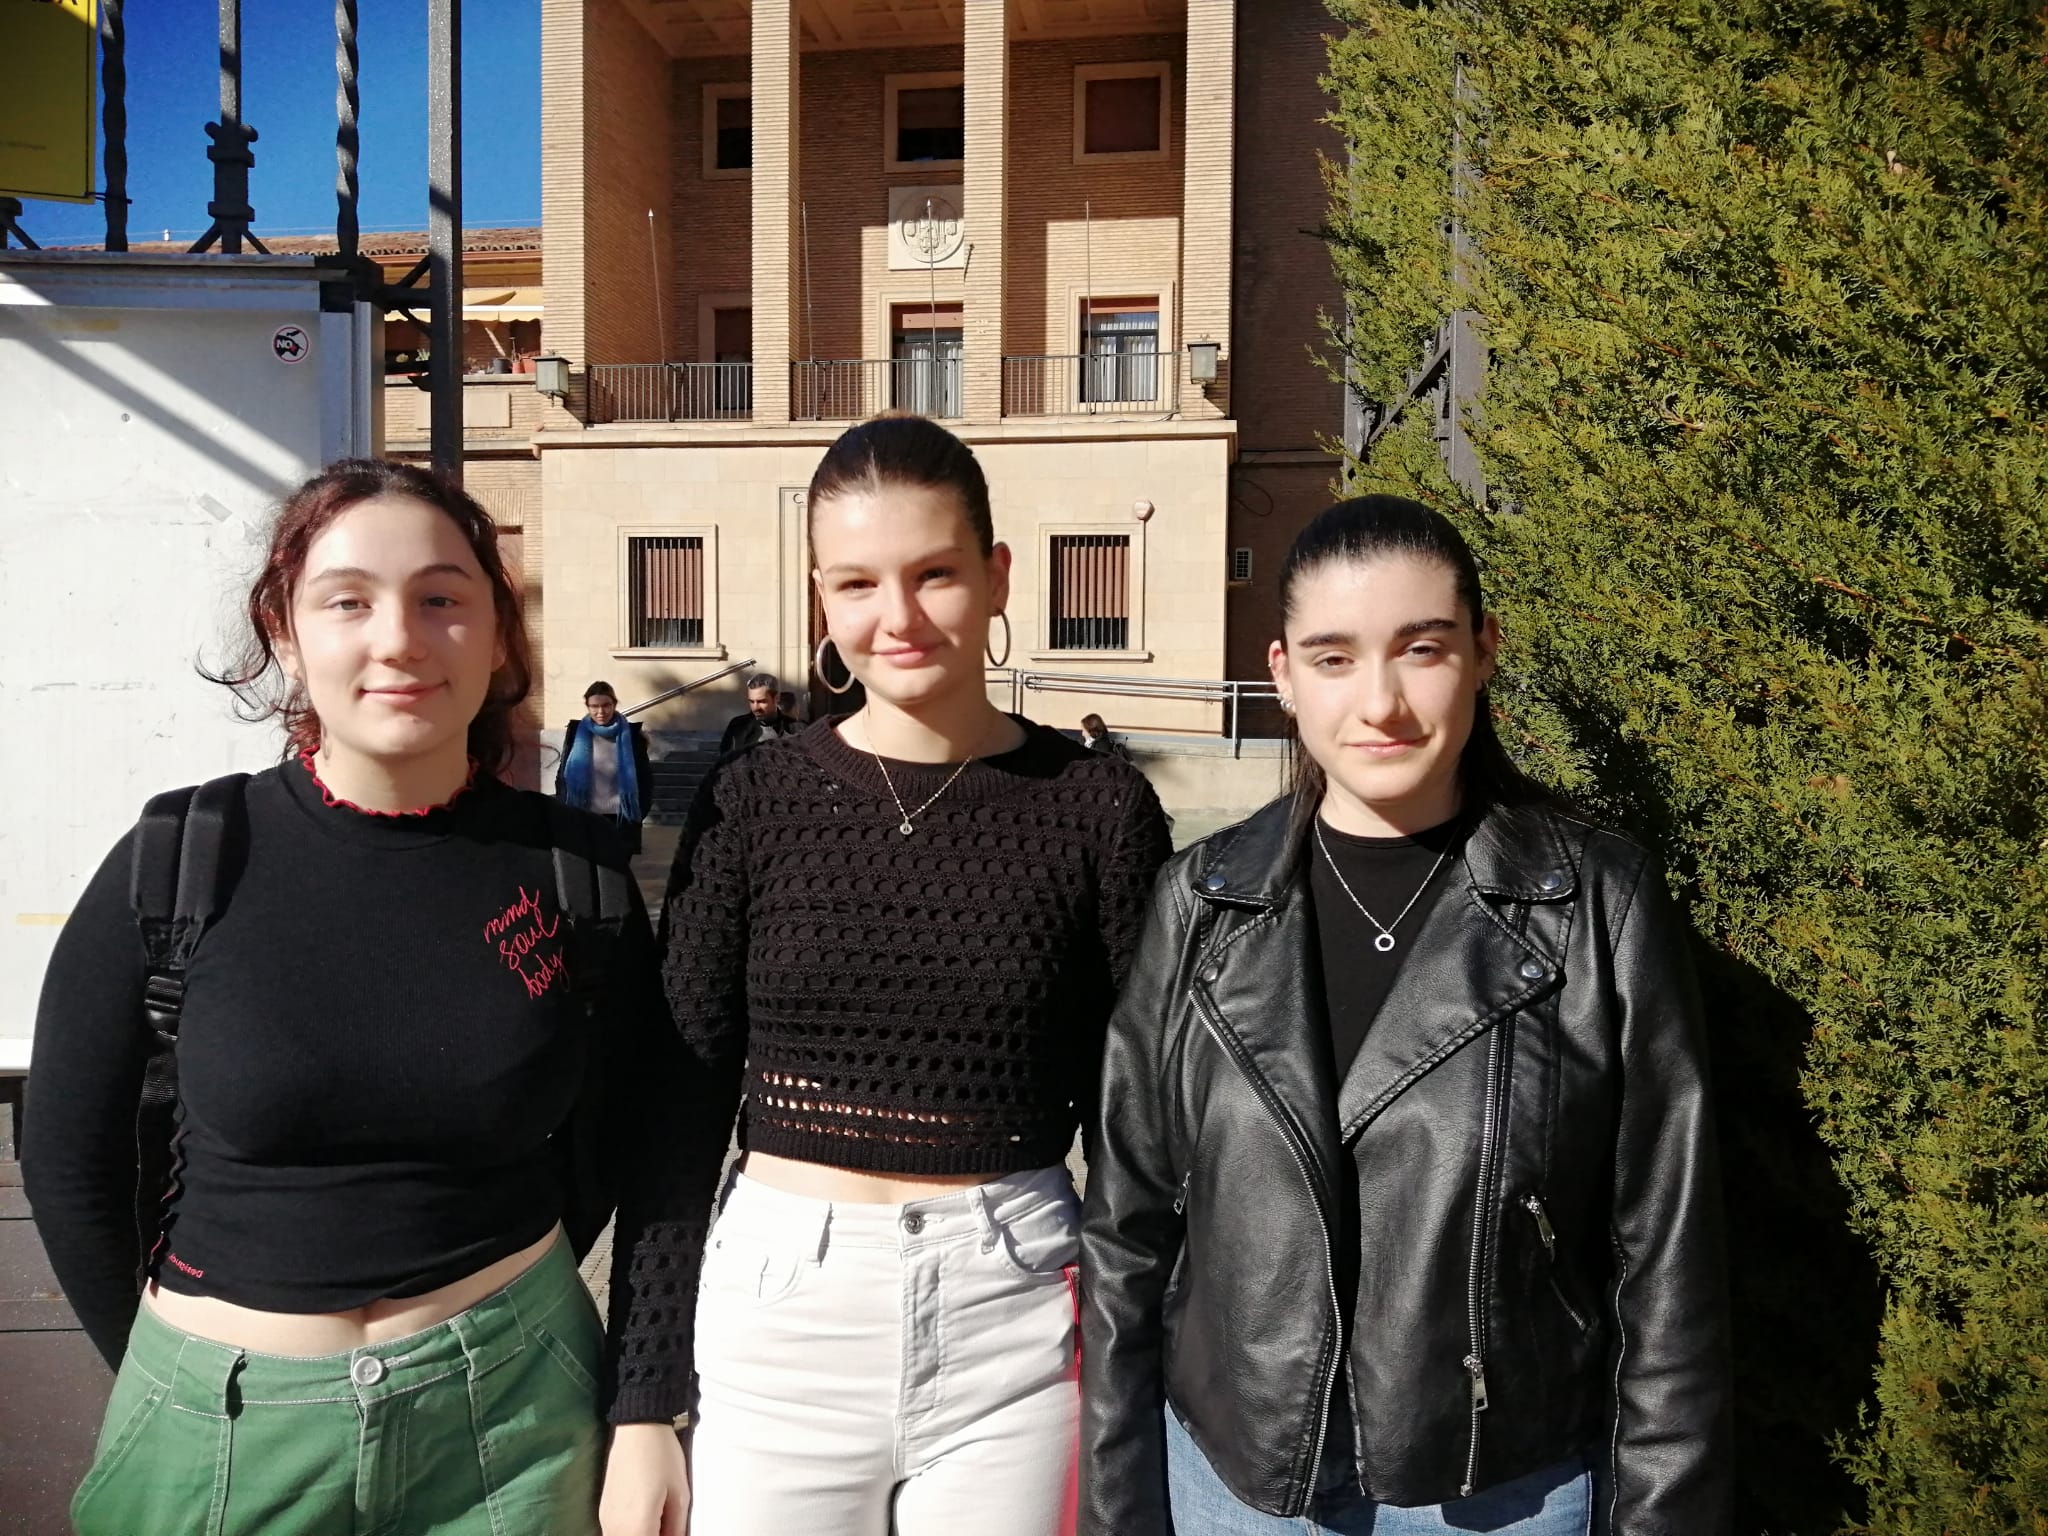 Students From The Residence Of Pedro Cerbuna At The University Of Zaragoza.